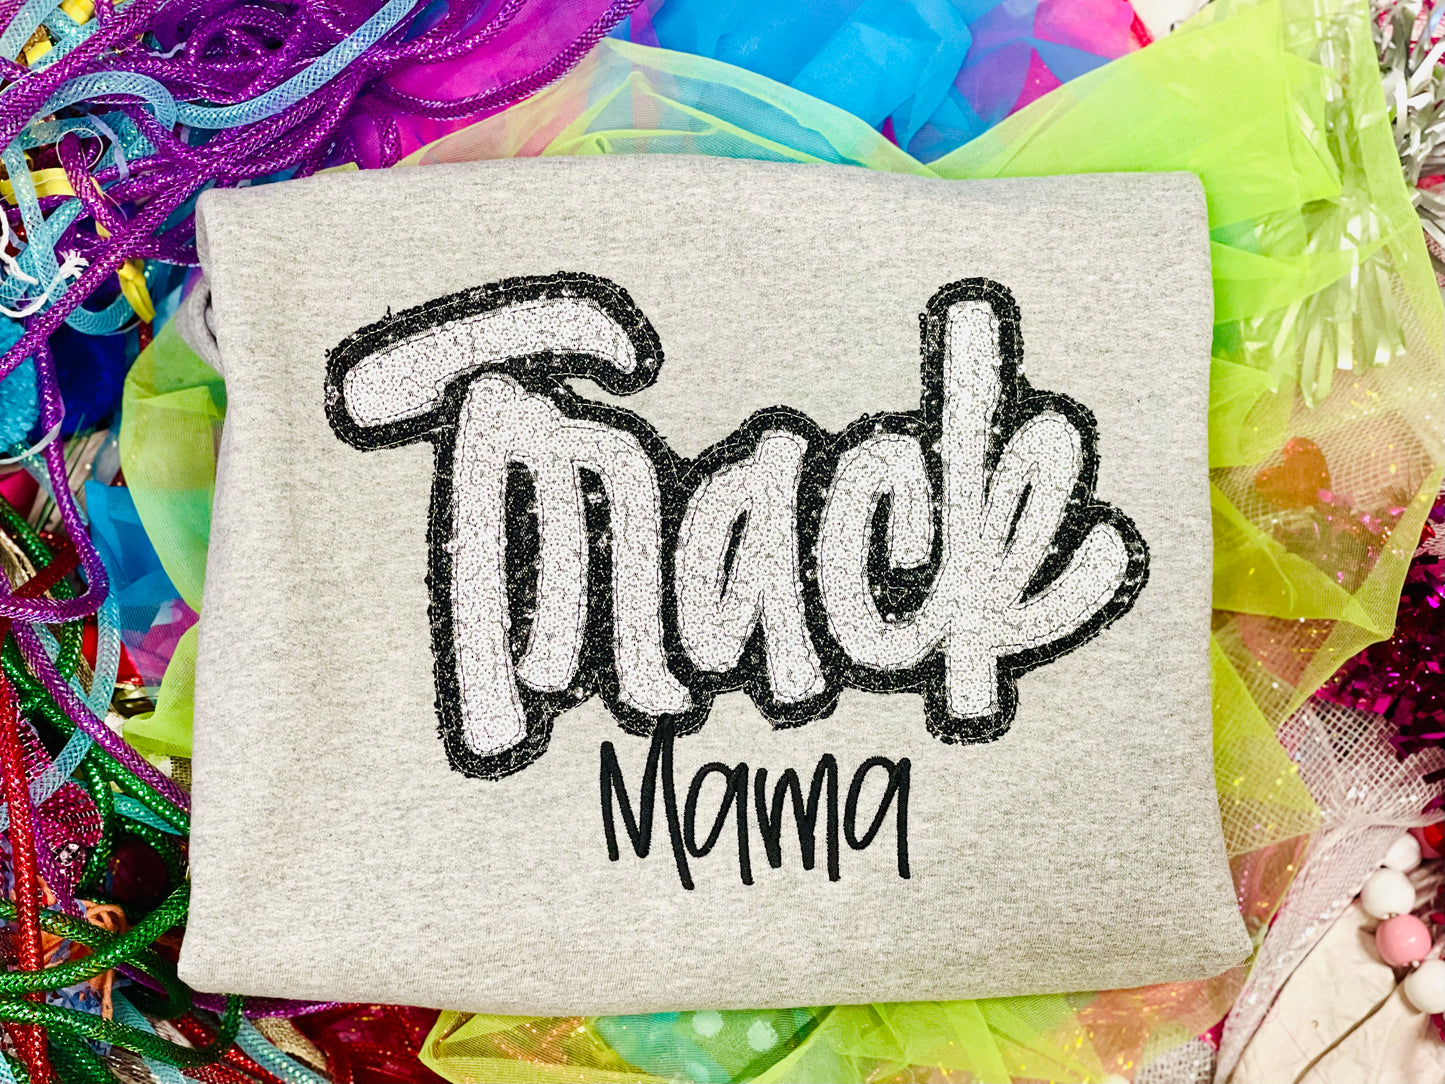 CUSTOM Embroidered TRACK MAMA Top!